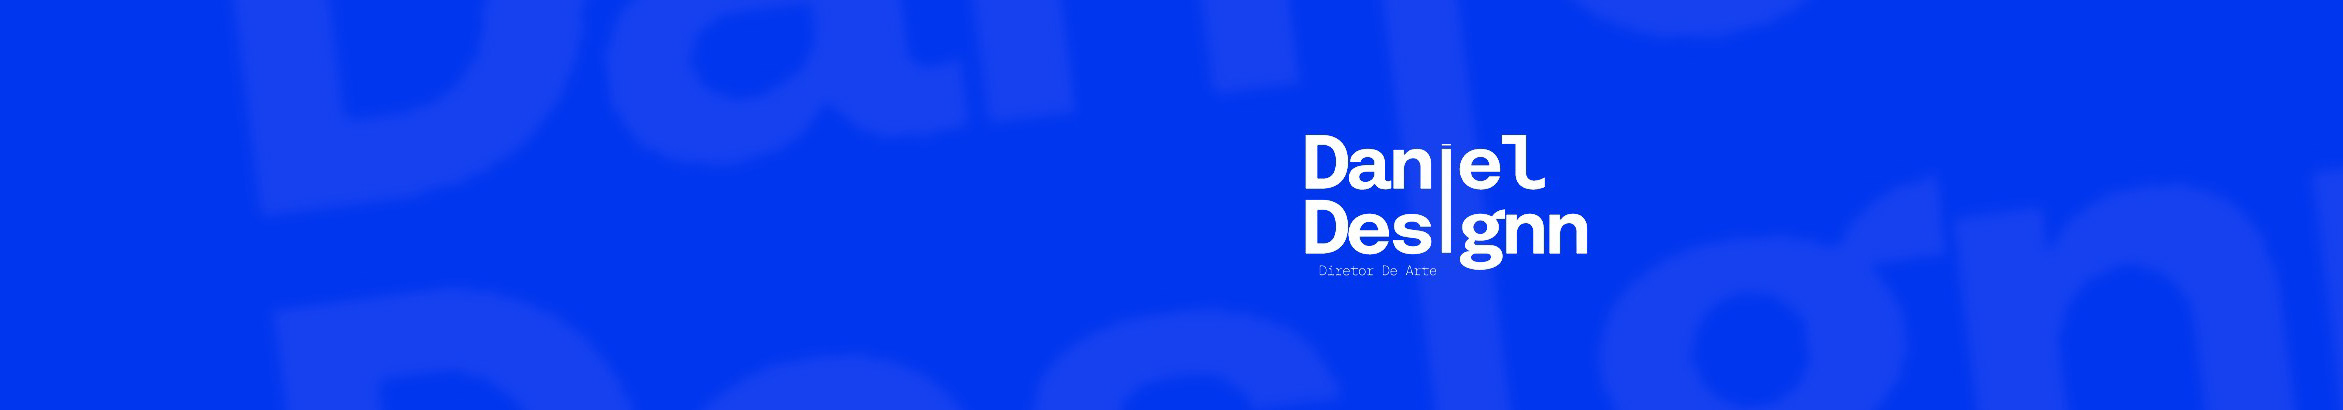 Banner de perfil de Daniel Designn